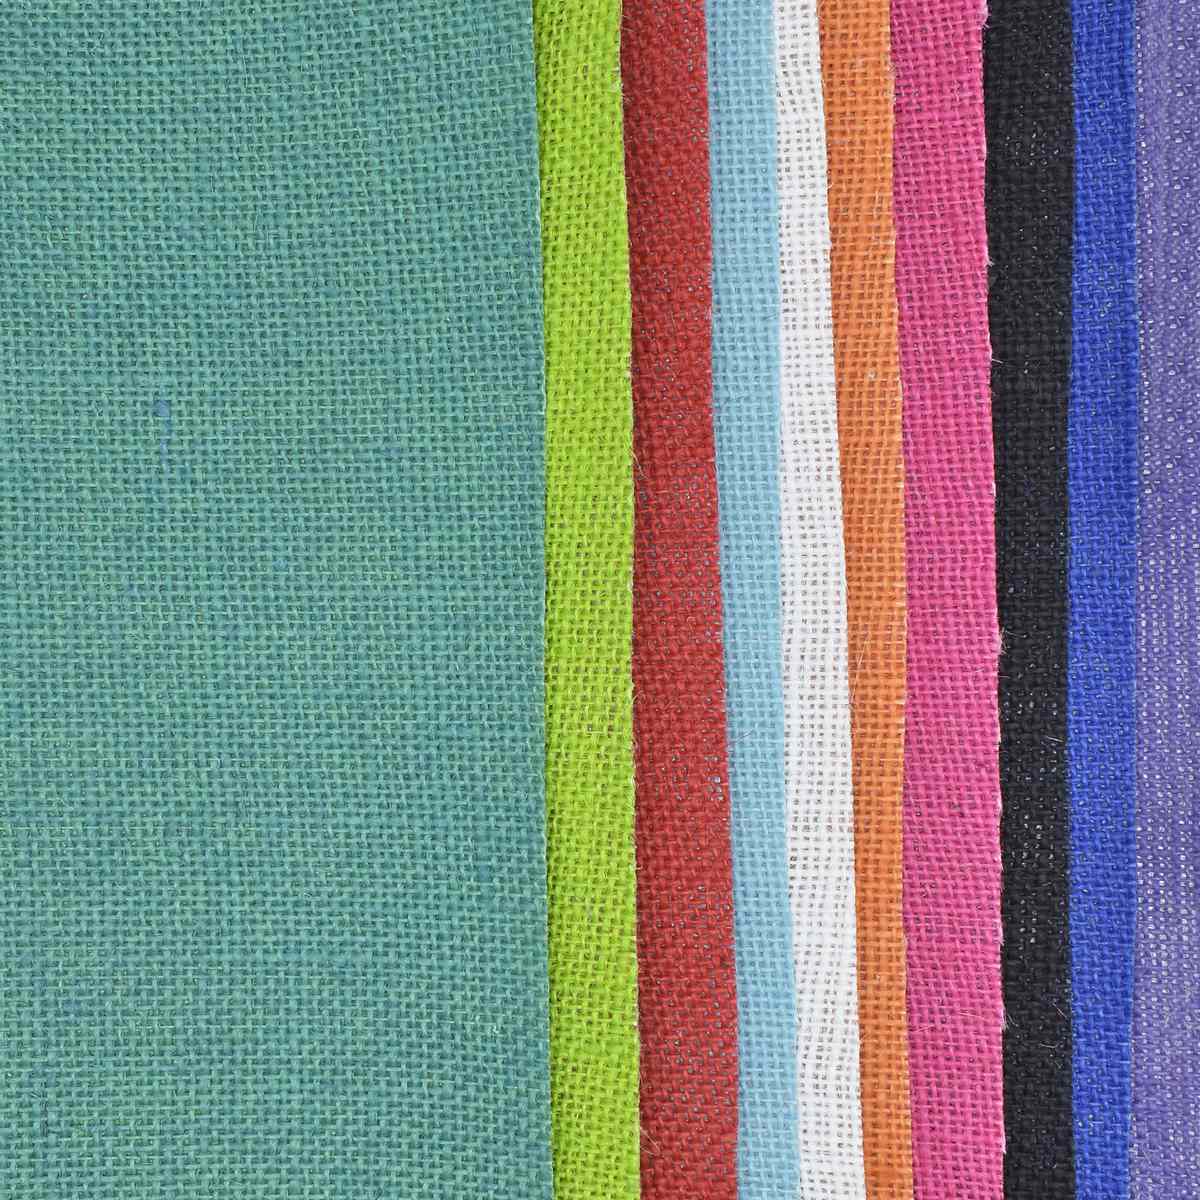 jags-mumbai Jute Ropes & Sheets A4 Jute Sheet 10 Colour Variety Pack (10 Sheets)- AJSWL10C